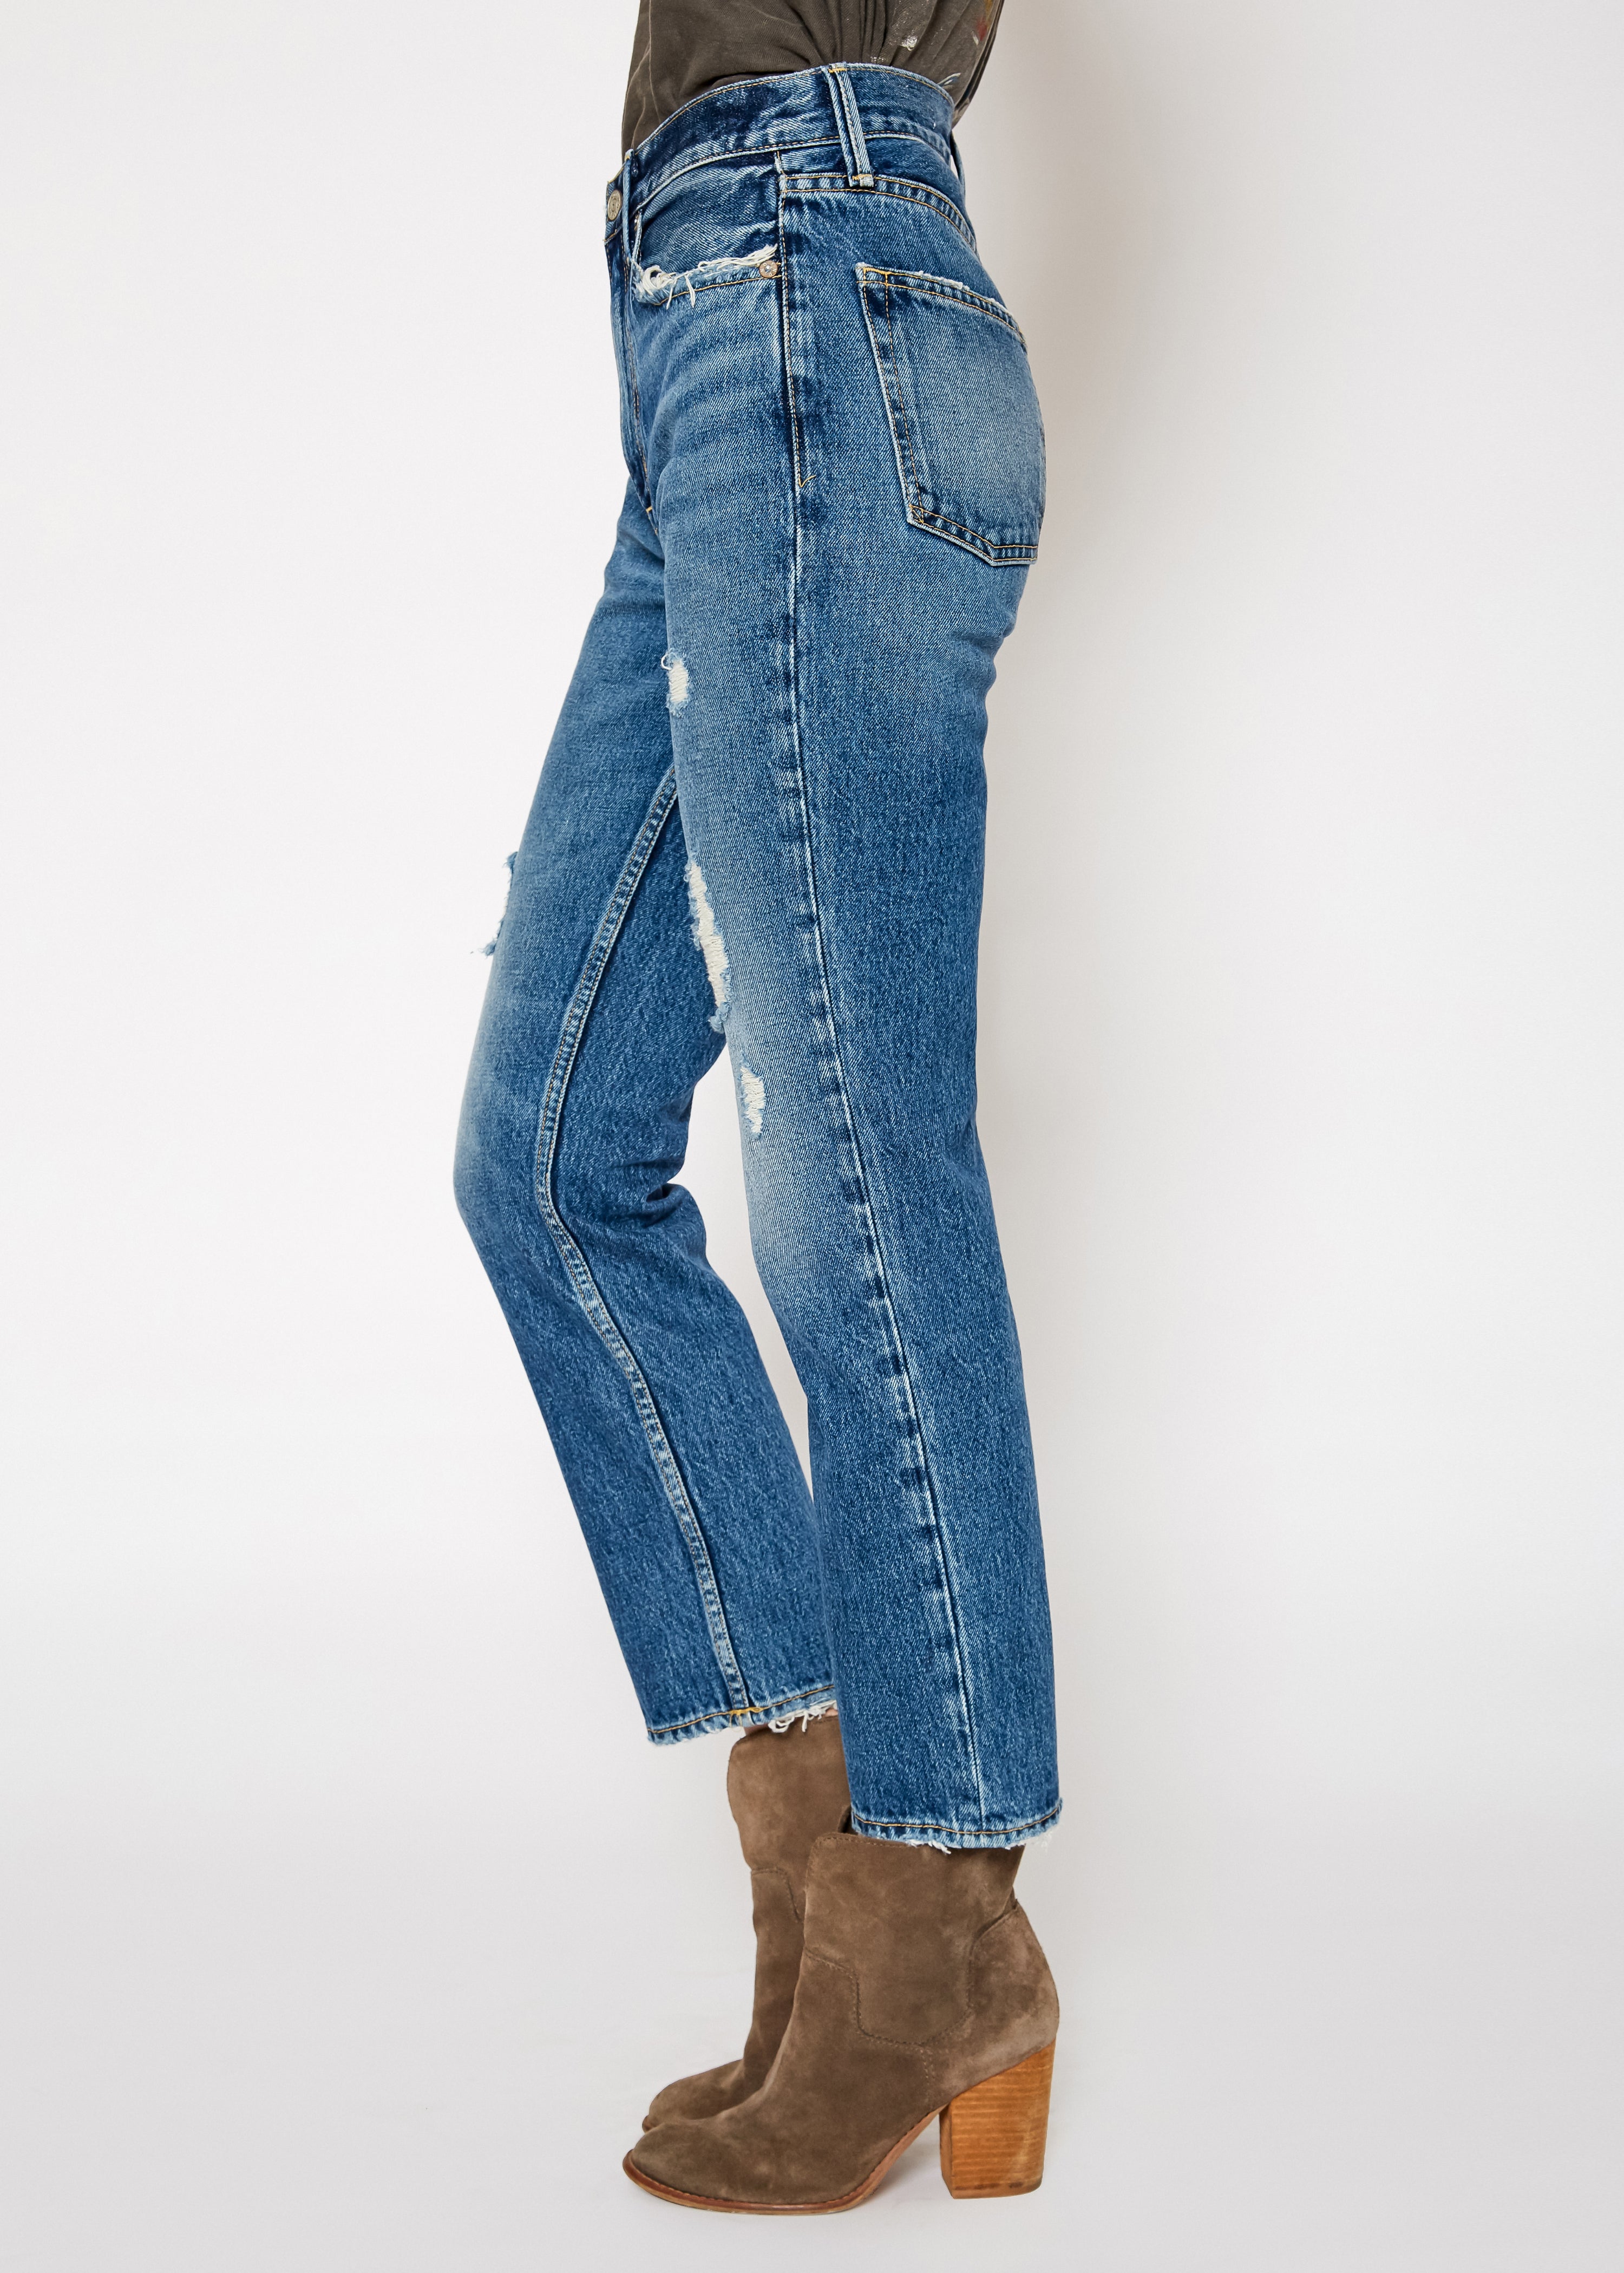 Claude High Rise Straight Jeans In Santa Cruz - Noend Denim